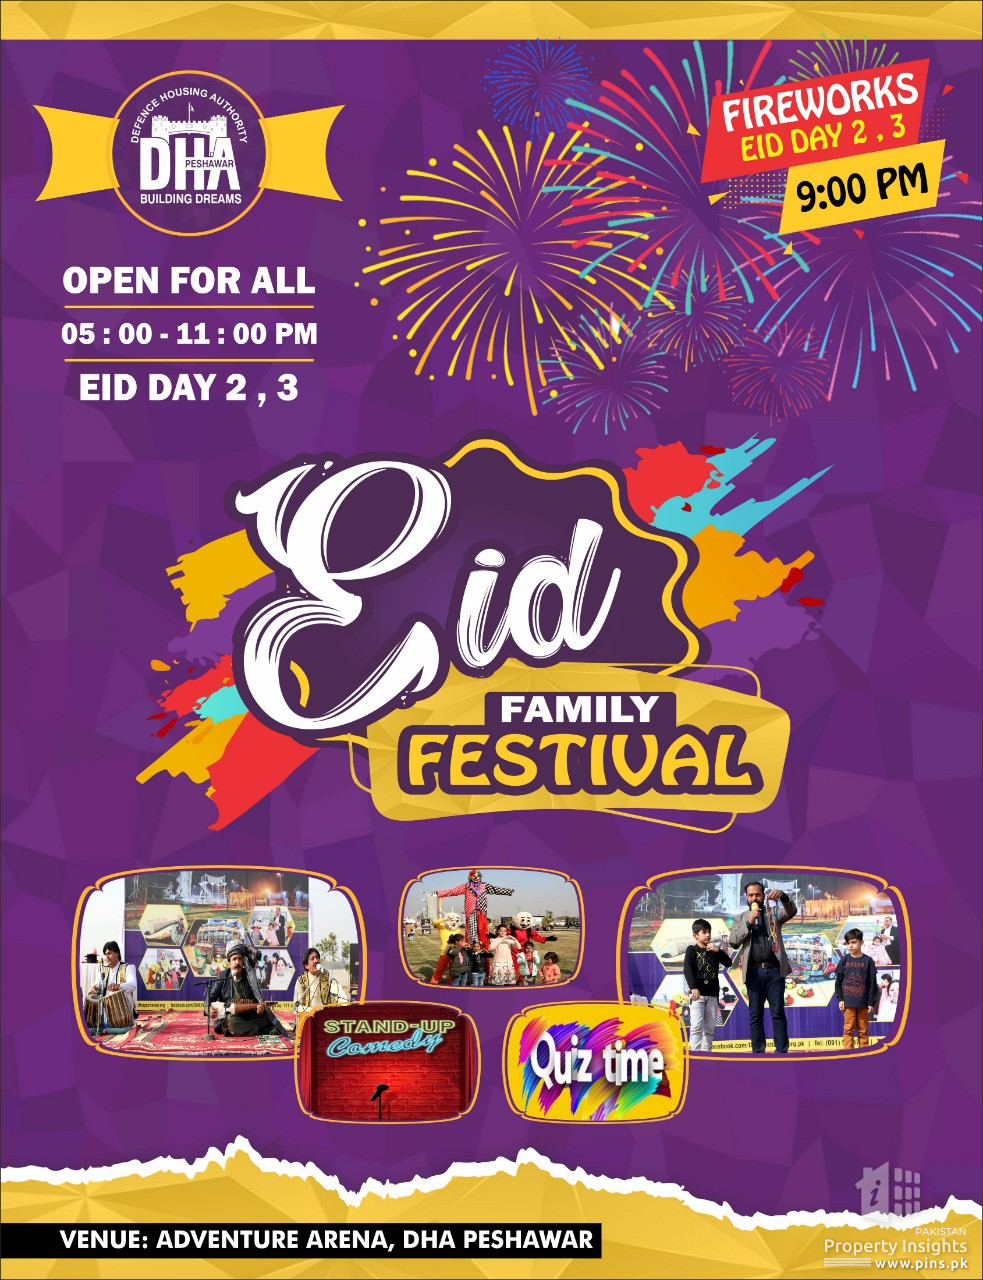 Eid Family Festival at Adventure Arena DHA Peshawar